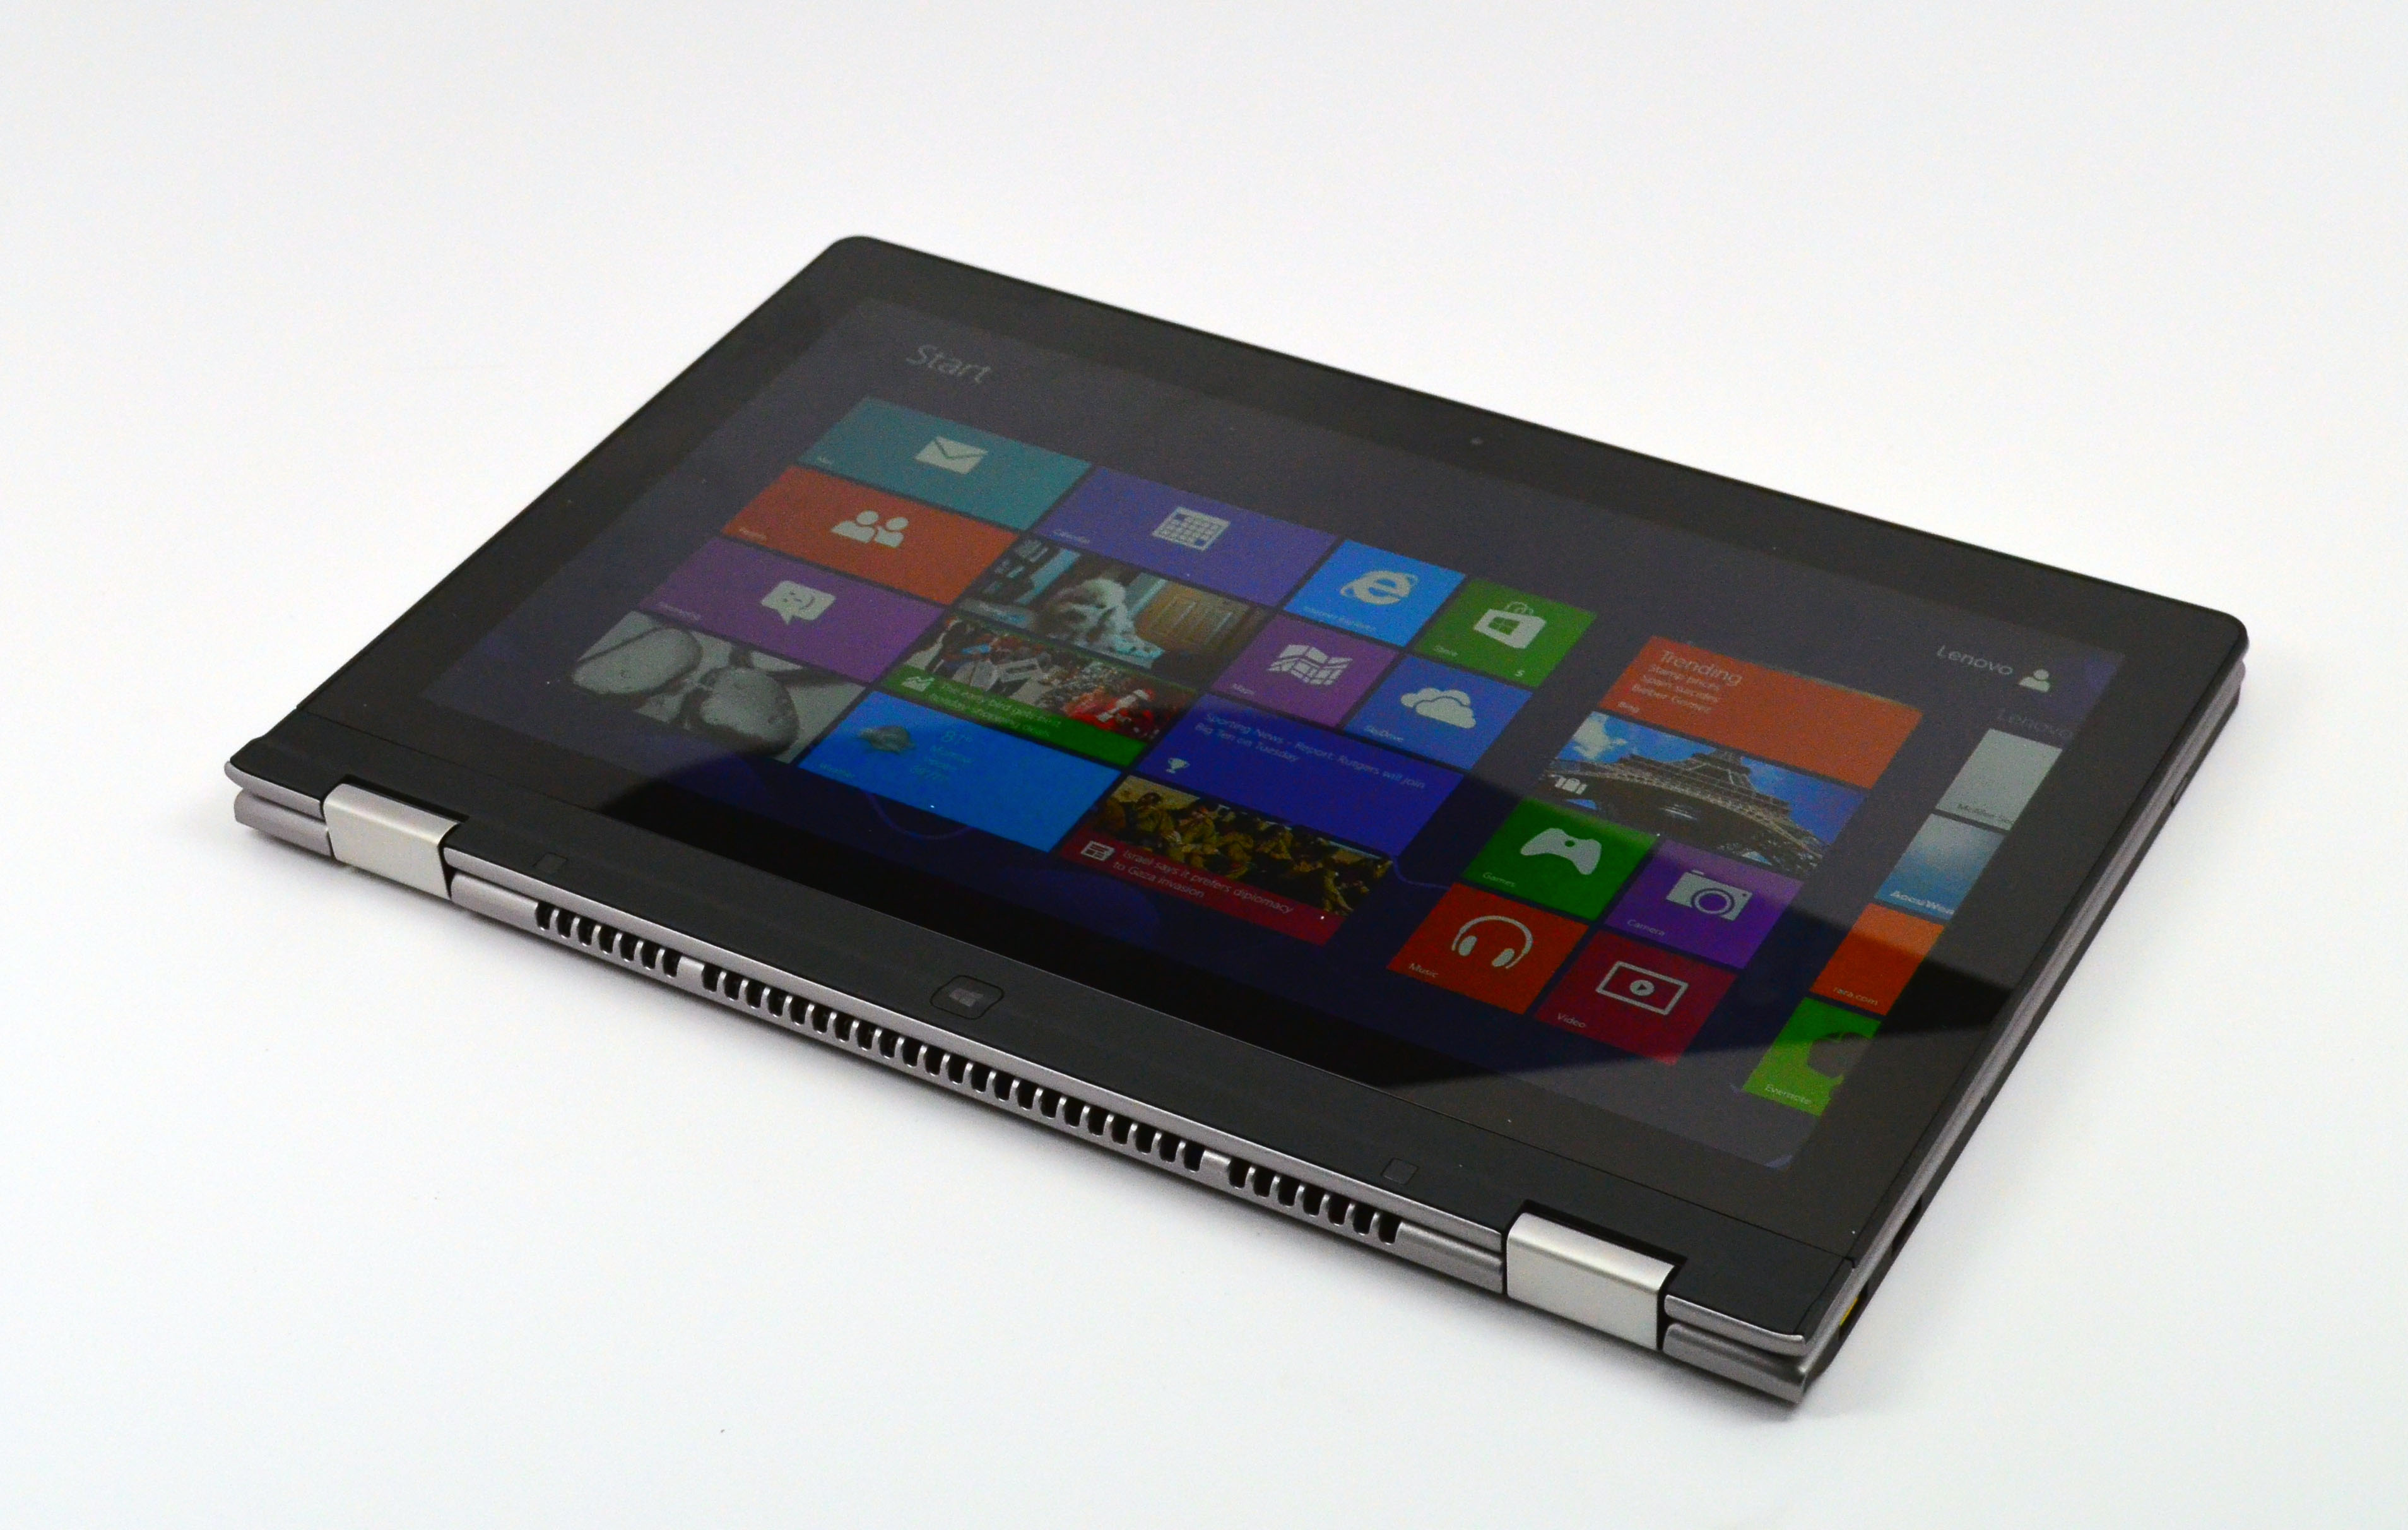 Lenovo Ideapad Yoga Re Ultrabook Convertible With